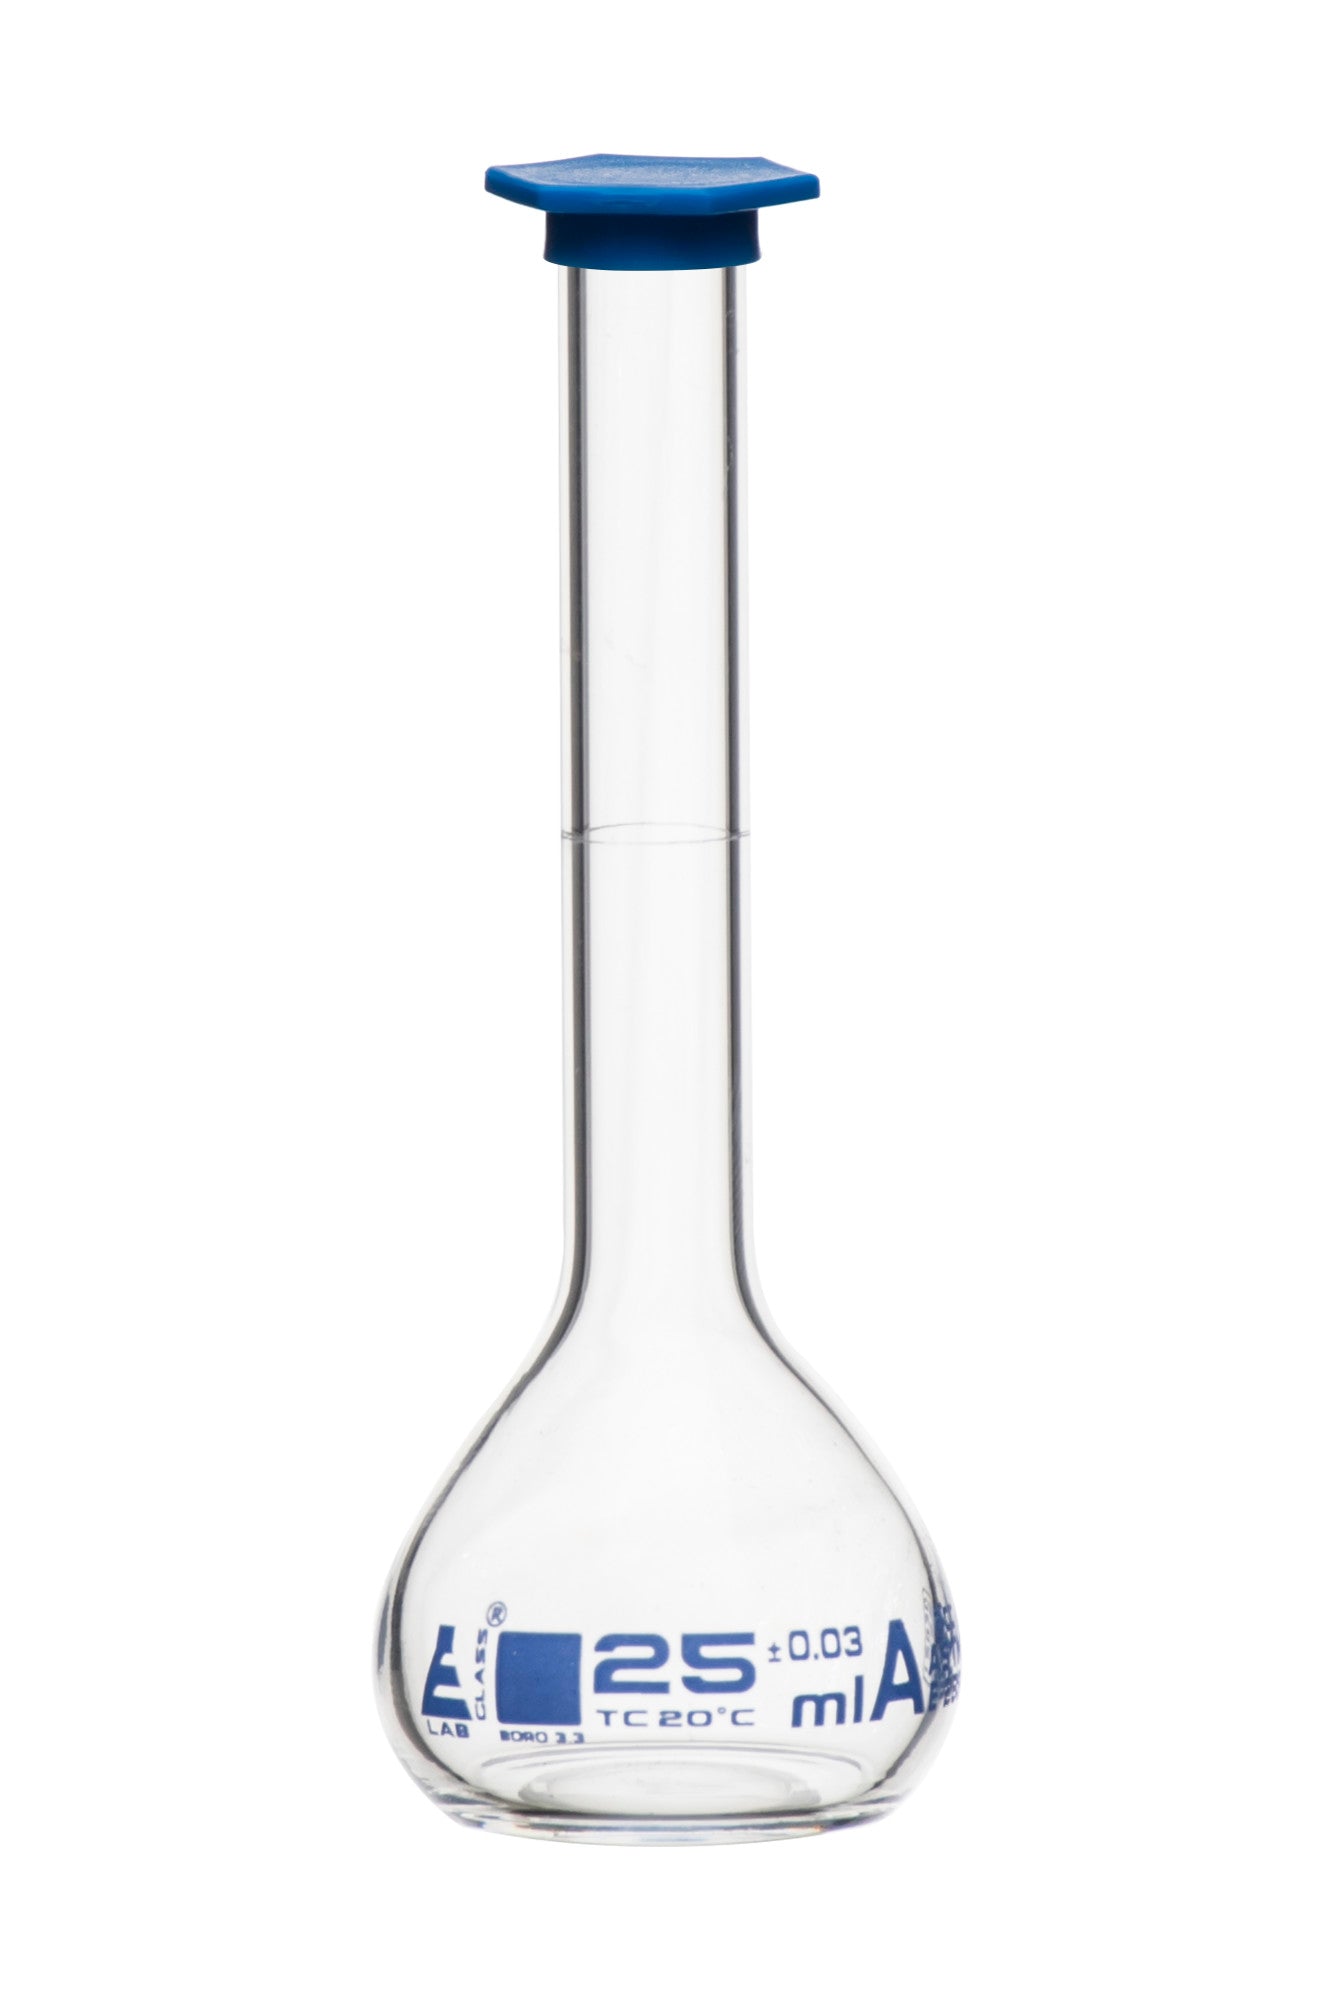 Borosilicate Volumetric Flask with Polyethylene Snap Cap, 25 ml, Class A, Blue Print, ASTM, Autoclavable